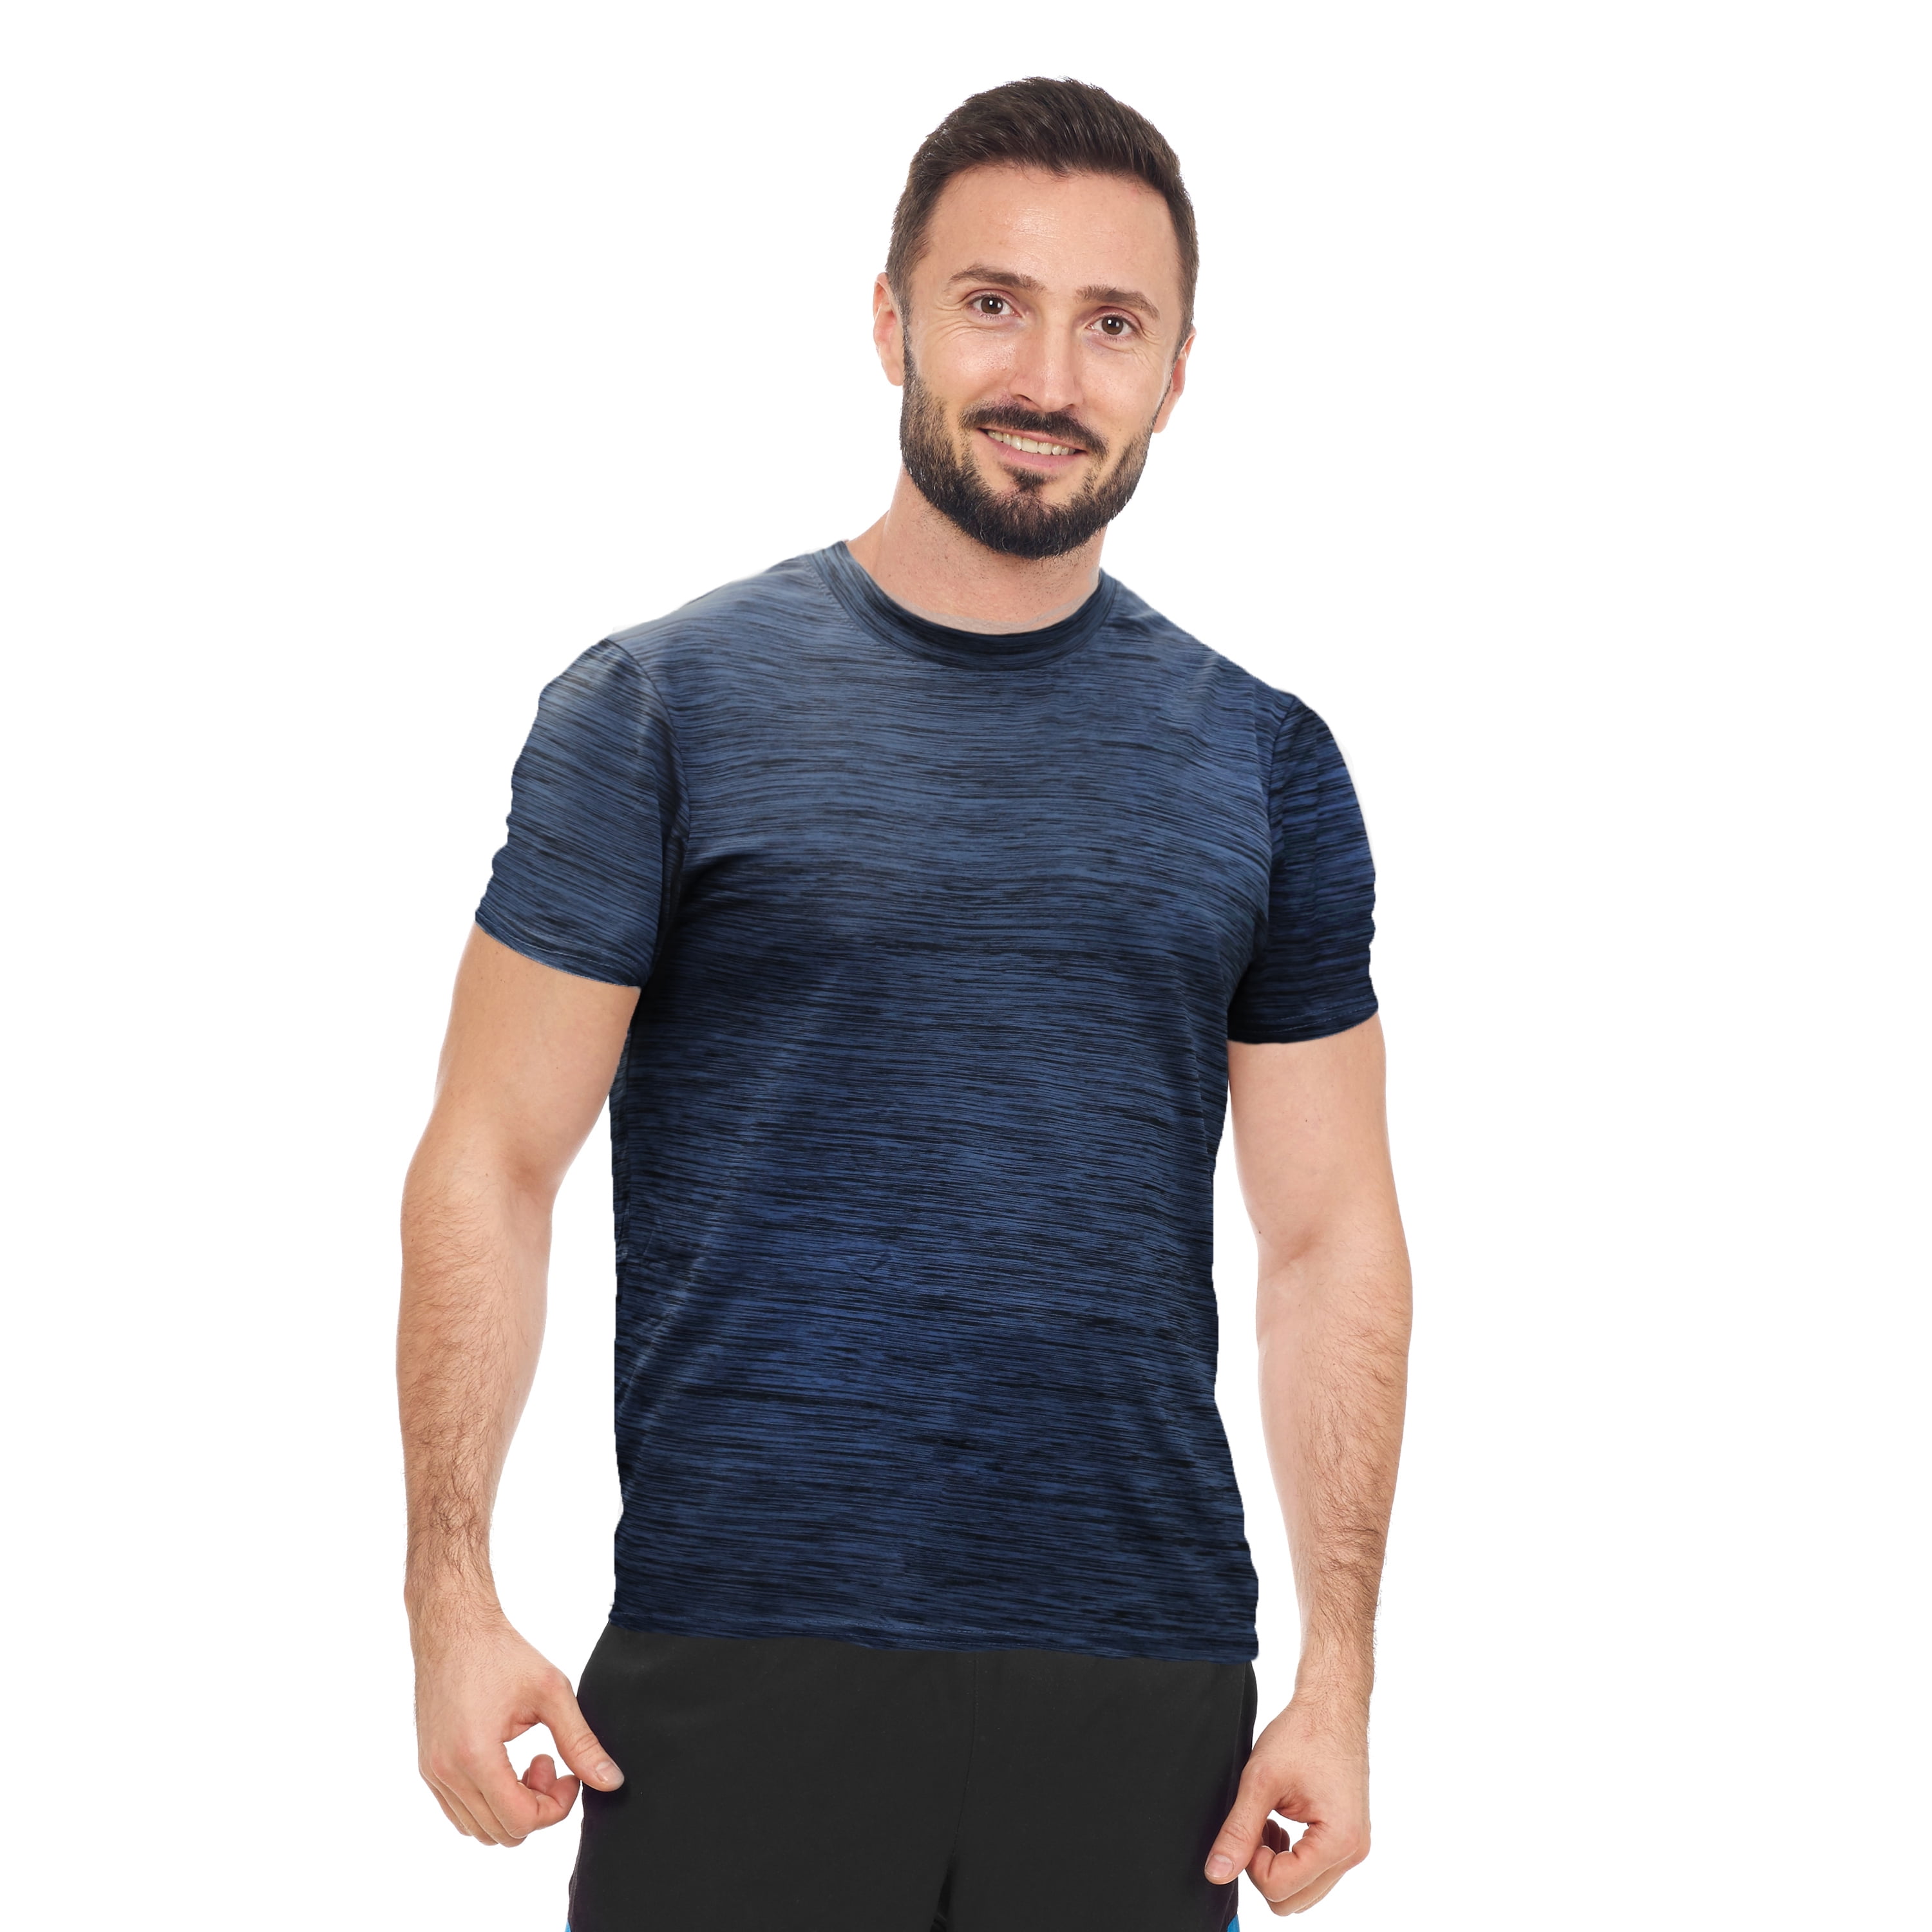 SDJMa Men's Relaxed Fit Heavyweight Short-SleeveMen's Sports Running  Basketball Training Suit Quick-drying Short-sleeved T-shirt